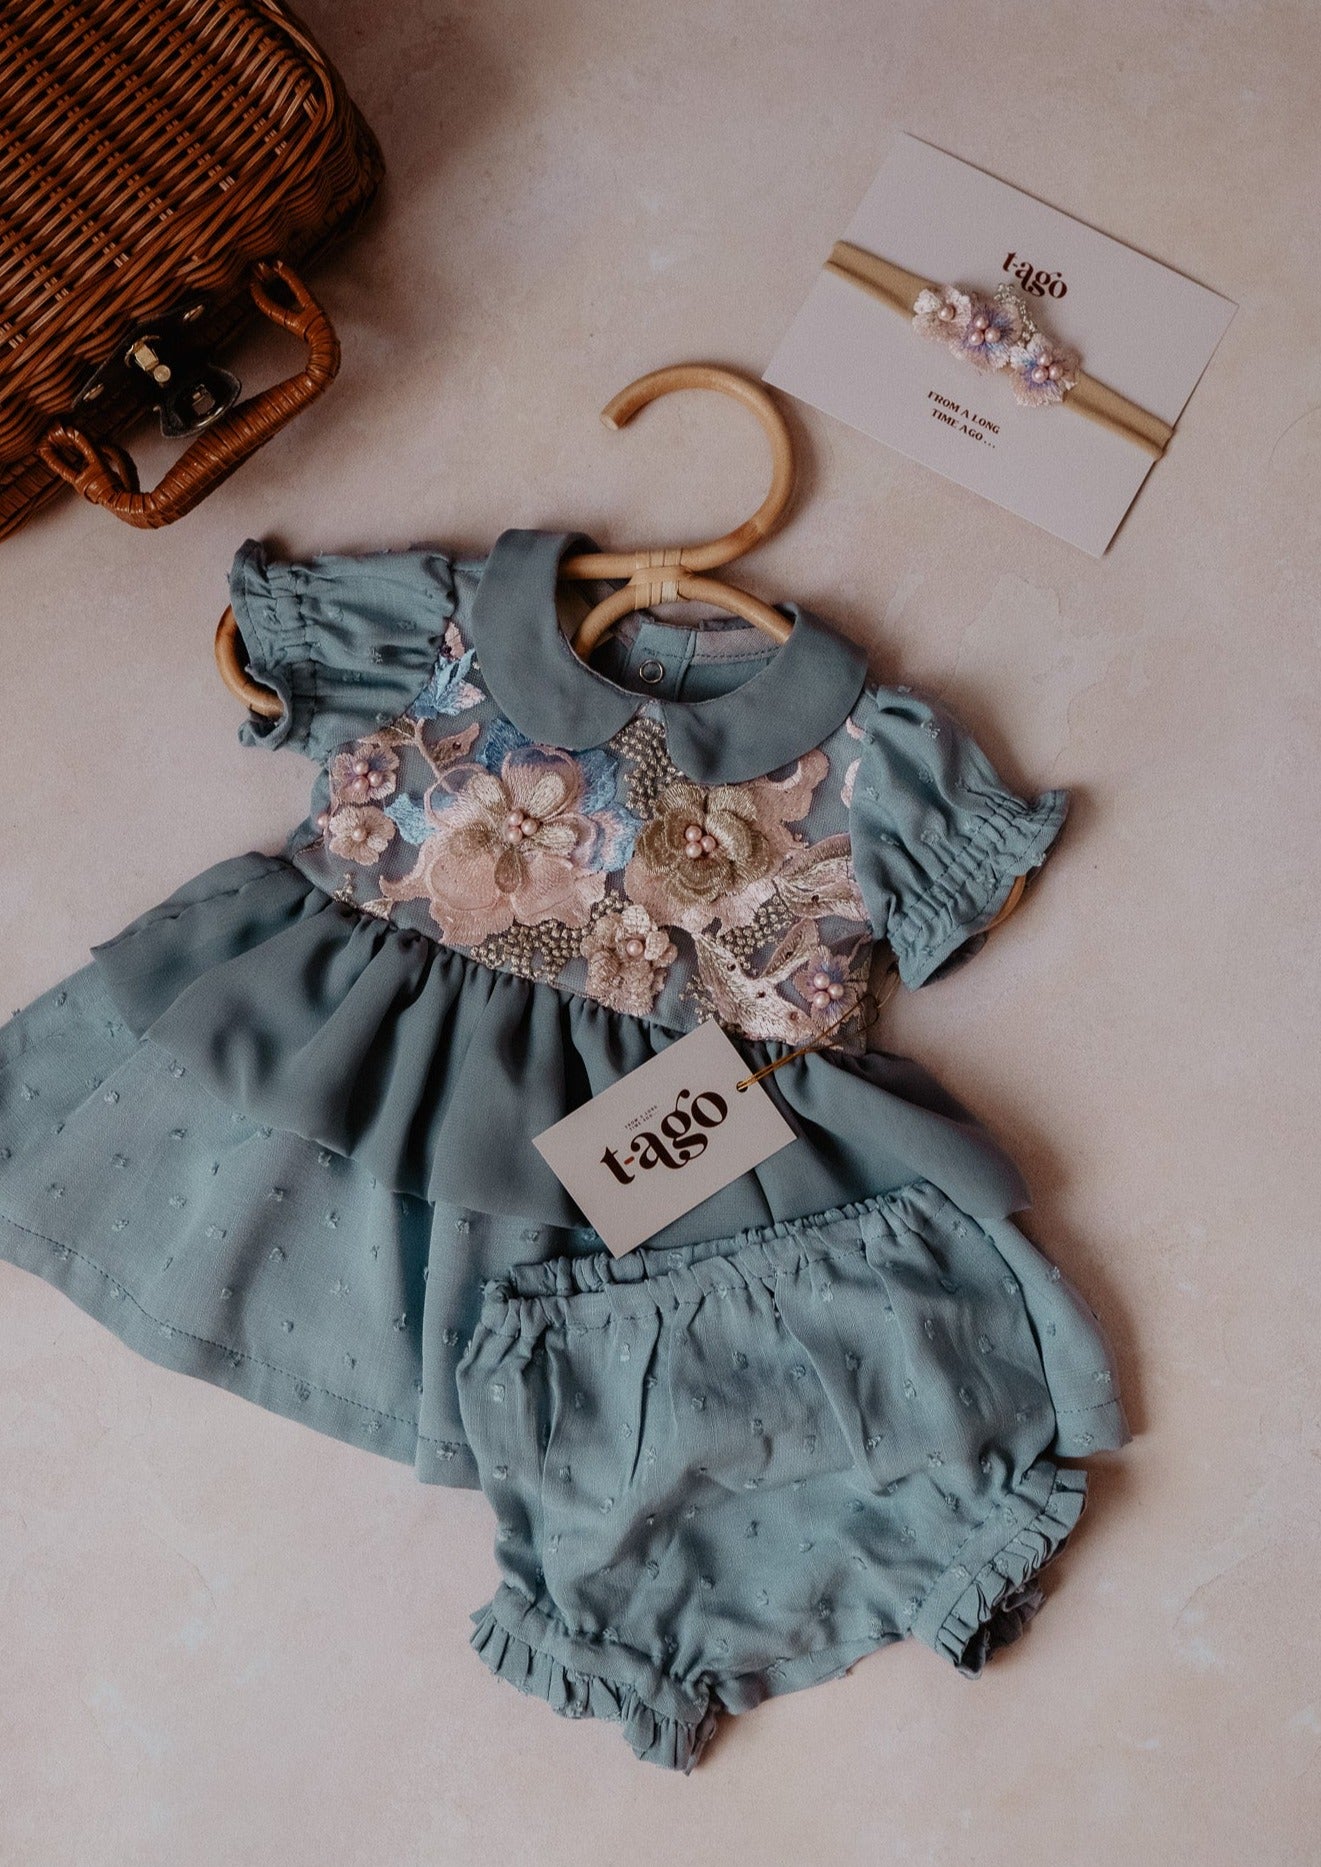 Newborn Blue Flowers Dress